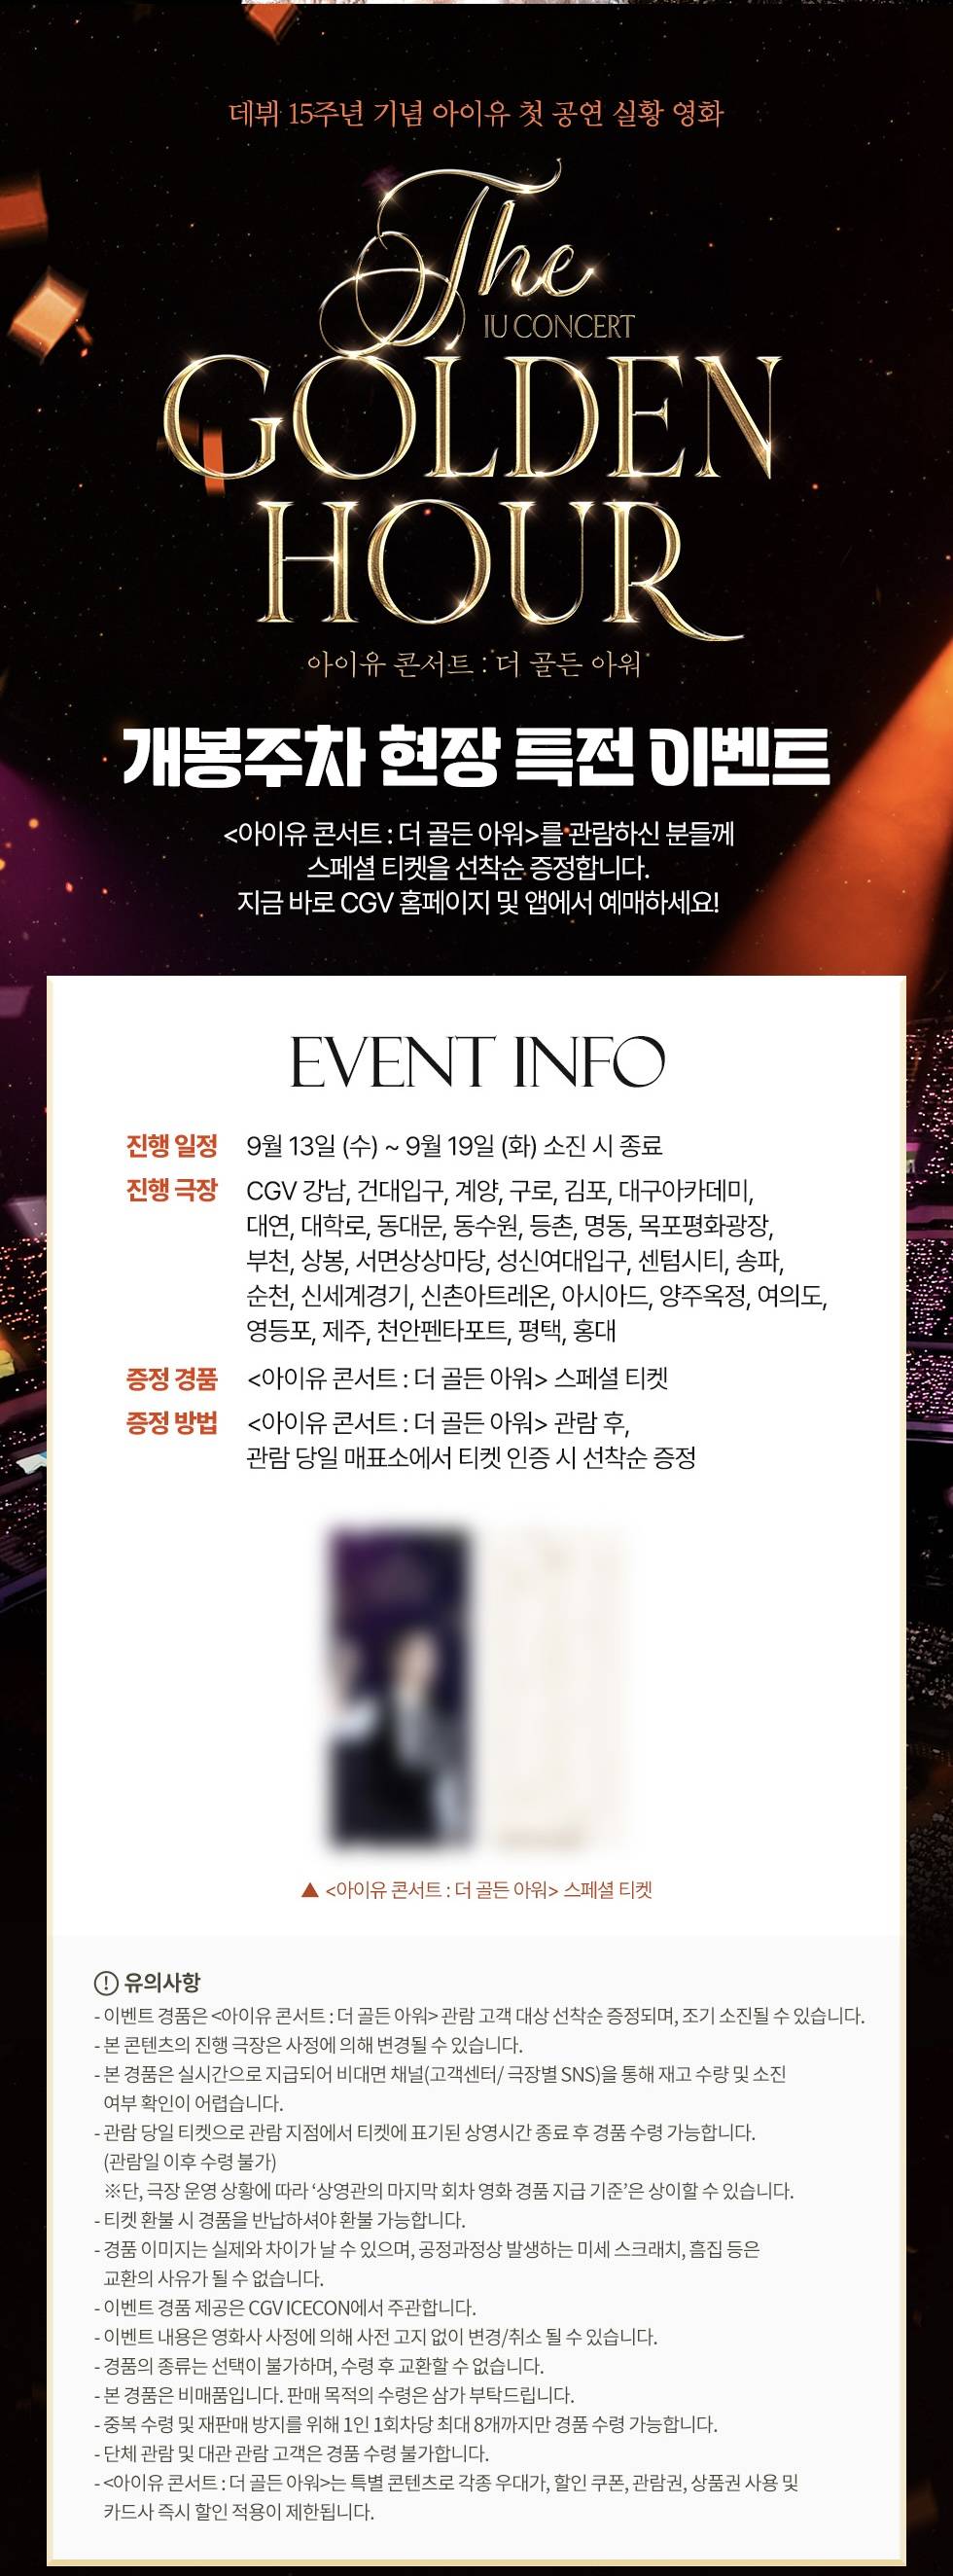 CGV 아이유 콘서트 아이맥스 개봉 이벤트 포스터 특전 공개 | 인스티즈